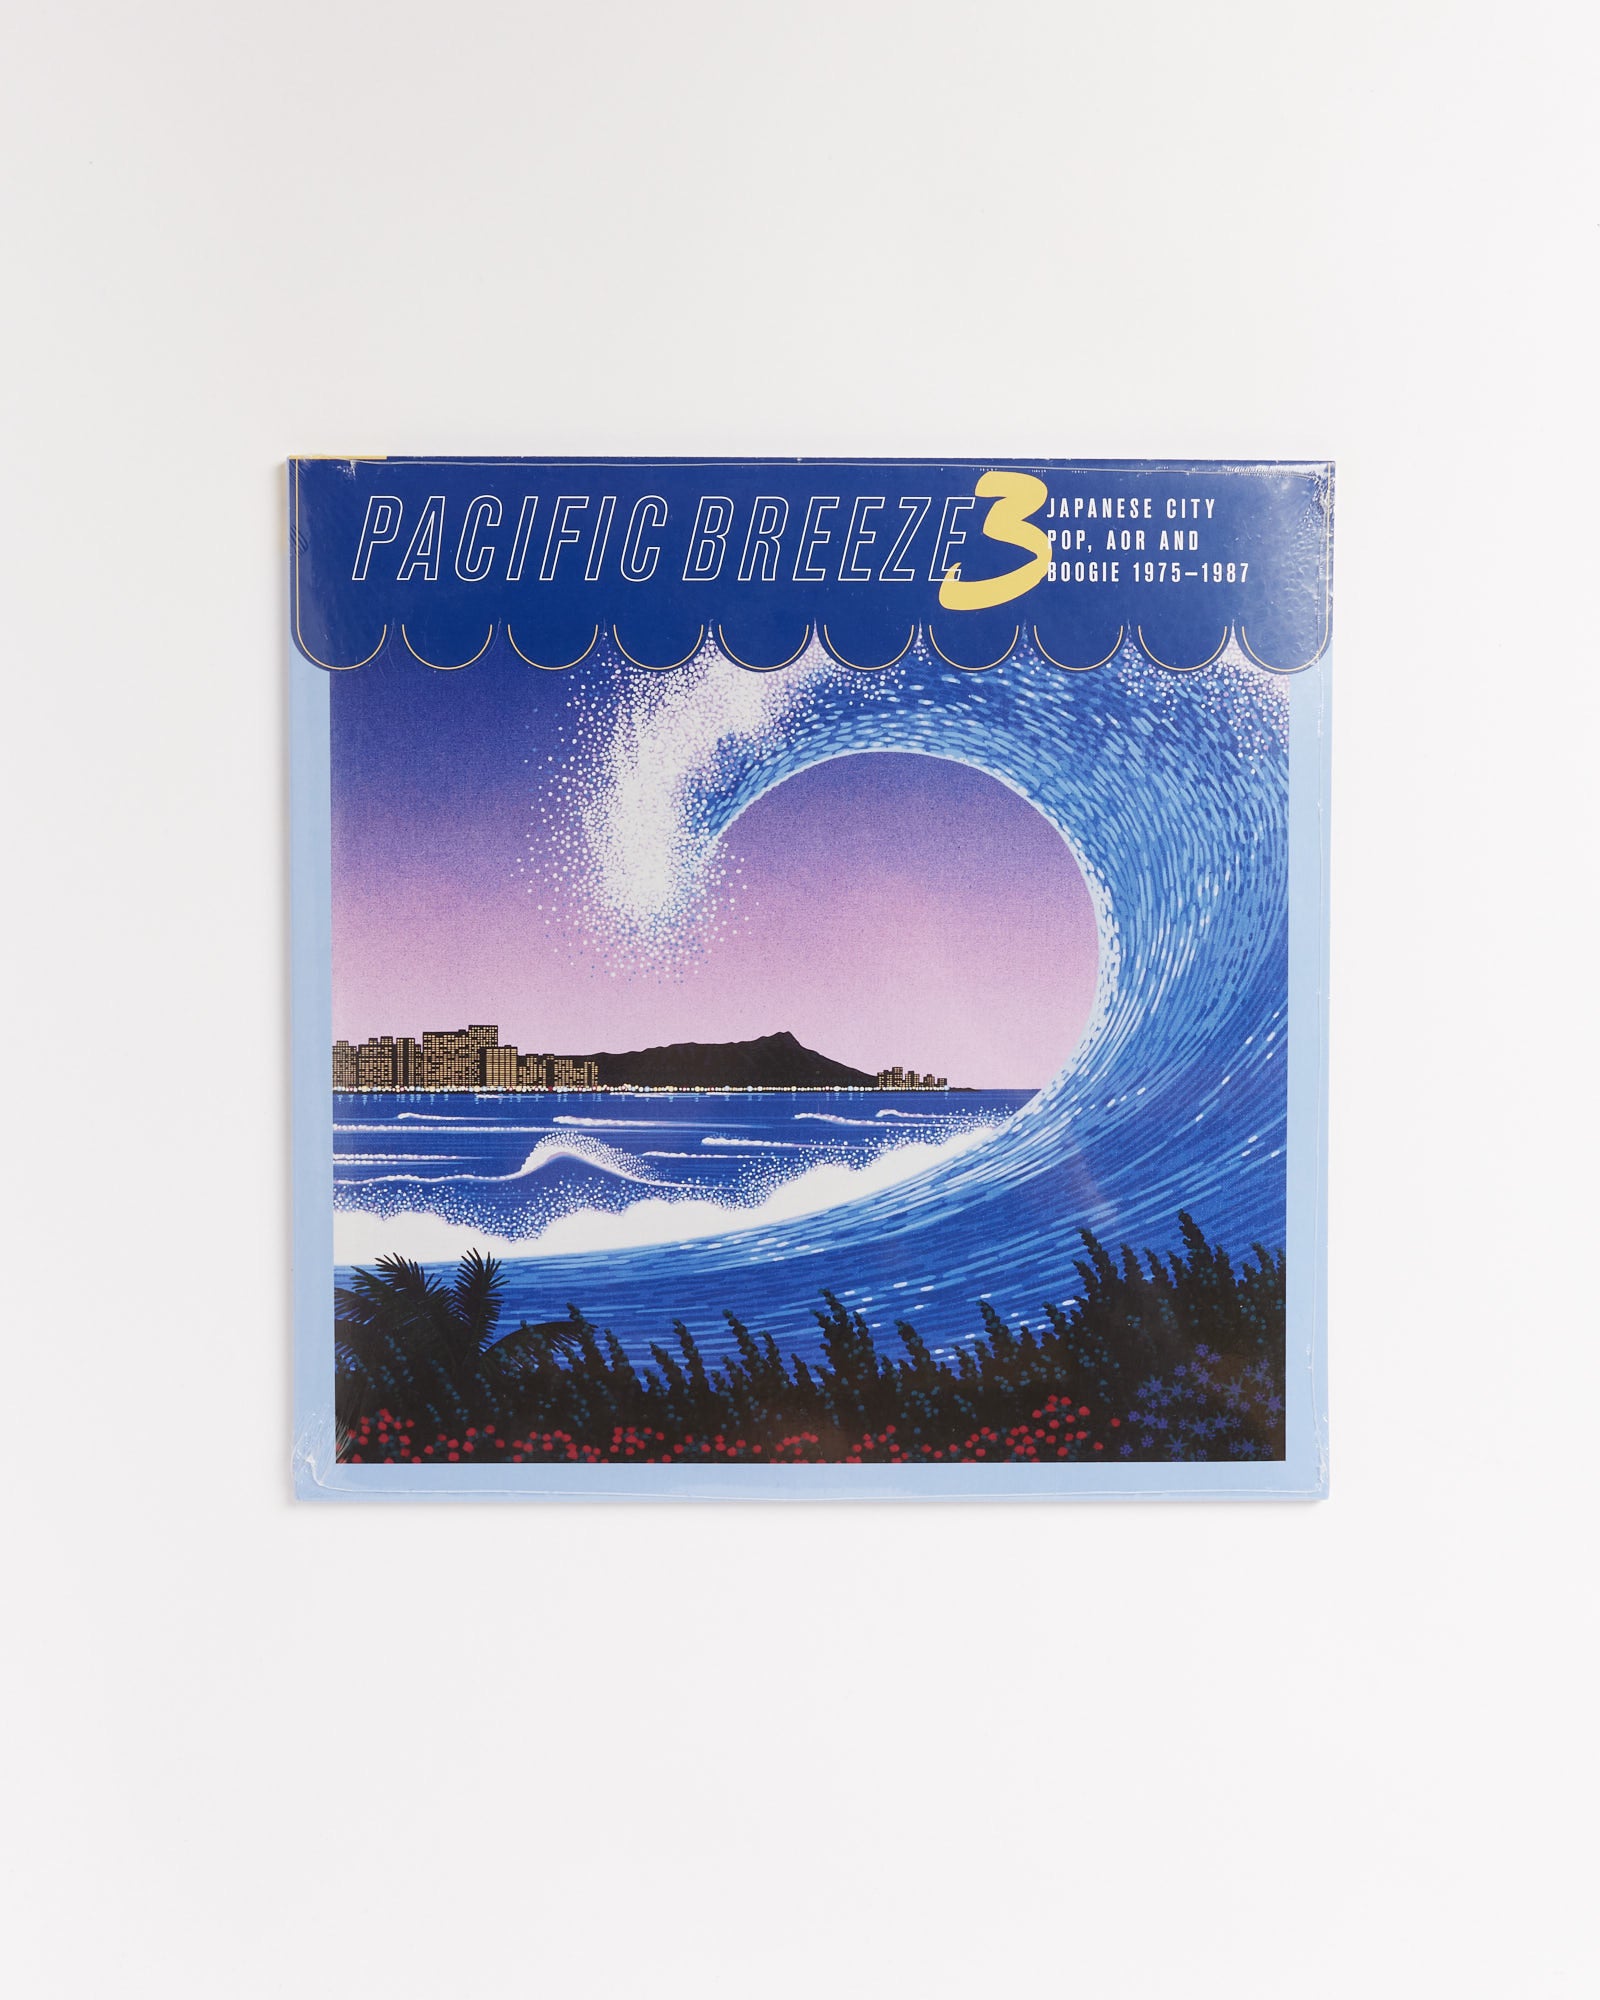 Pacific Breeze Volume 3: Japanese City Pop, AOR & Boogie 1975-1987 Vinyl